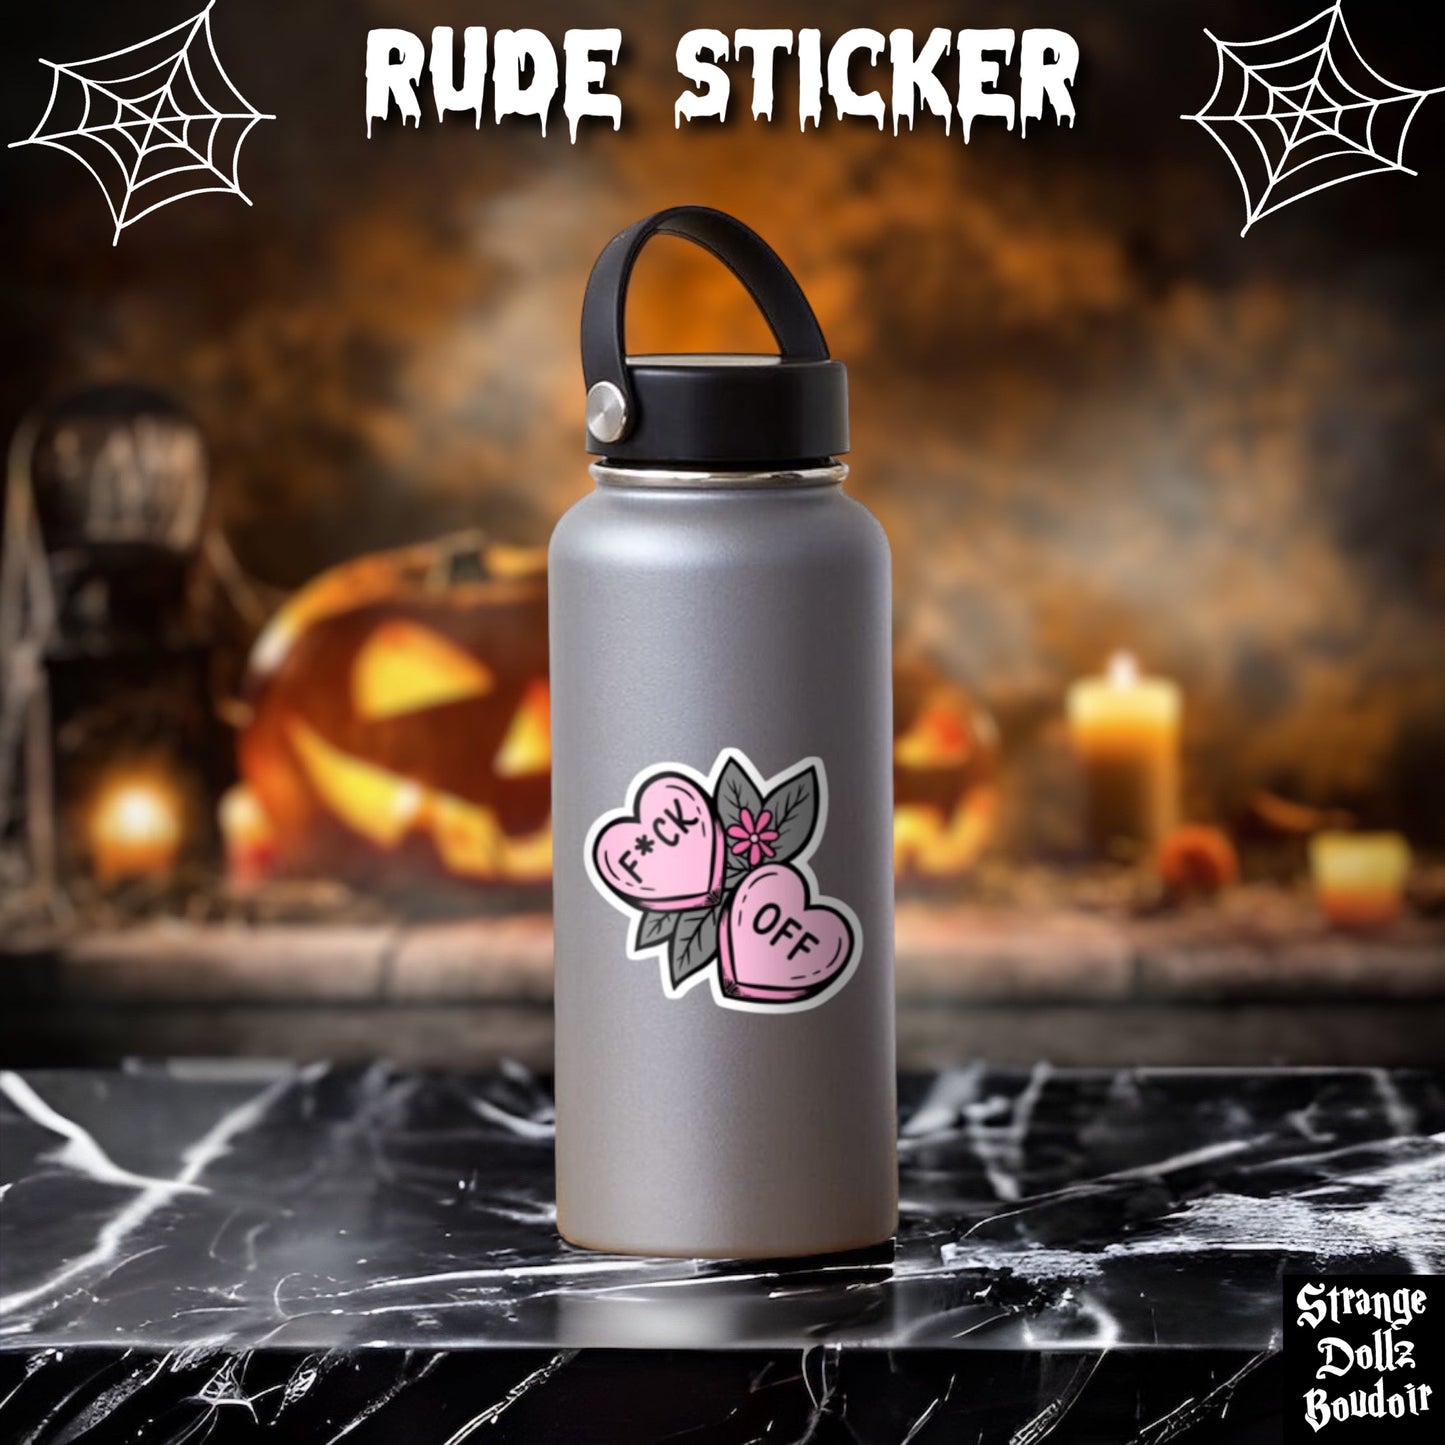 Rude Hearts sticker, Pastel Goth Spooky Sticker, Gothic stationery, Halloween, Strange Dollz Boudoir